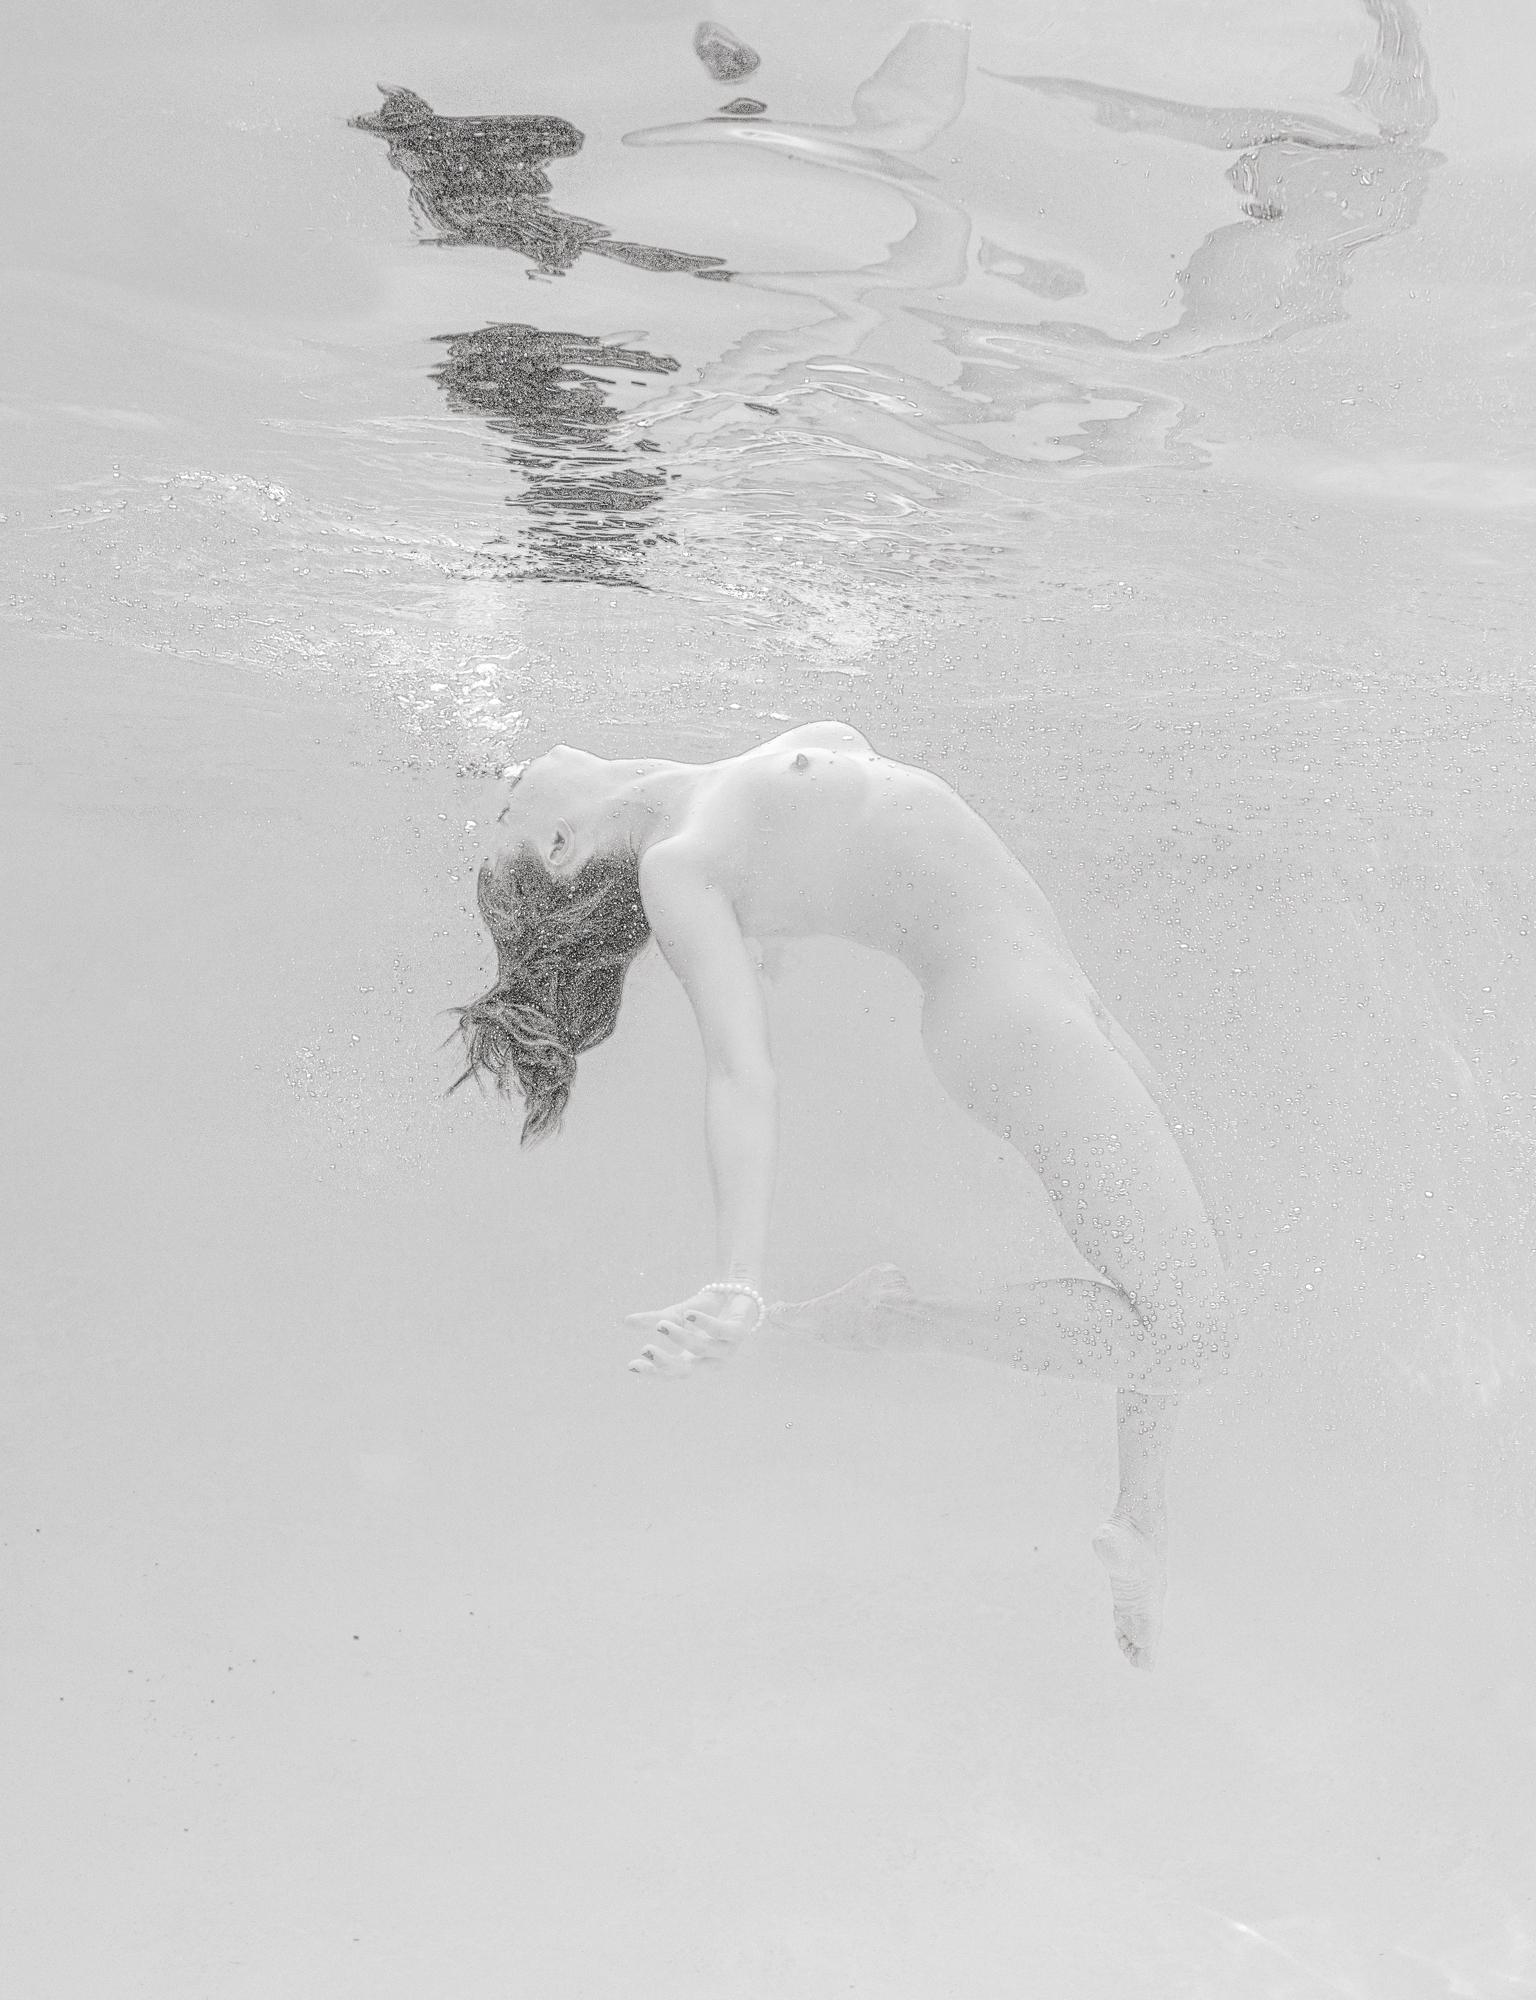 Soft Dance - underwater black & white nude photograph - print on aluminum 60x40"